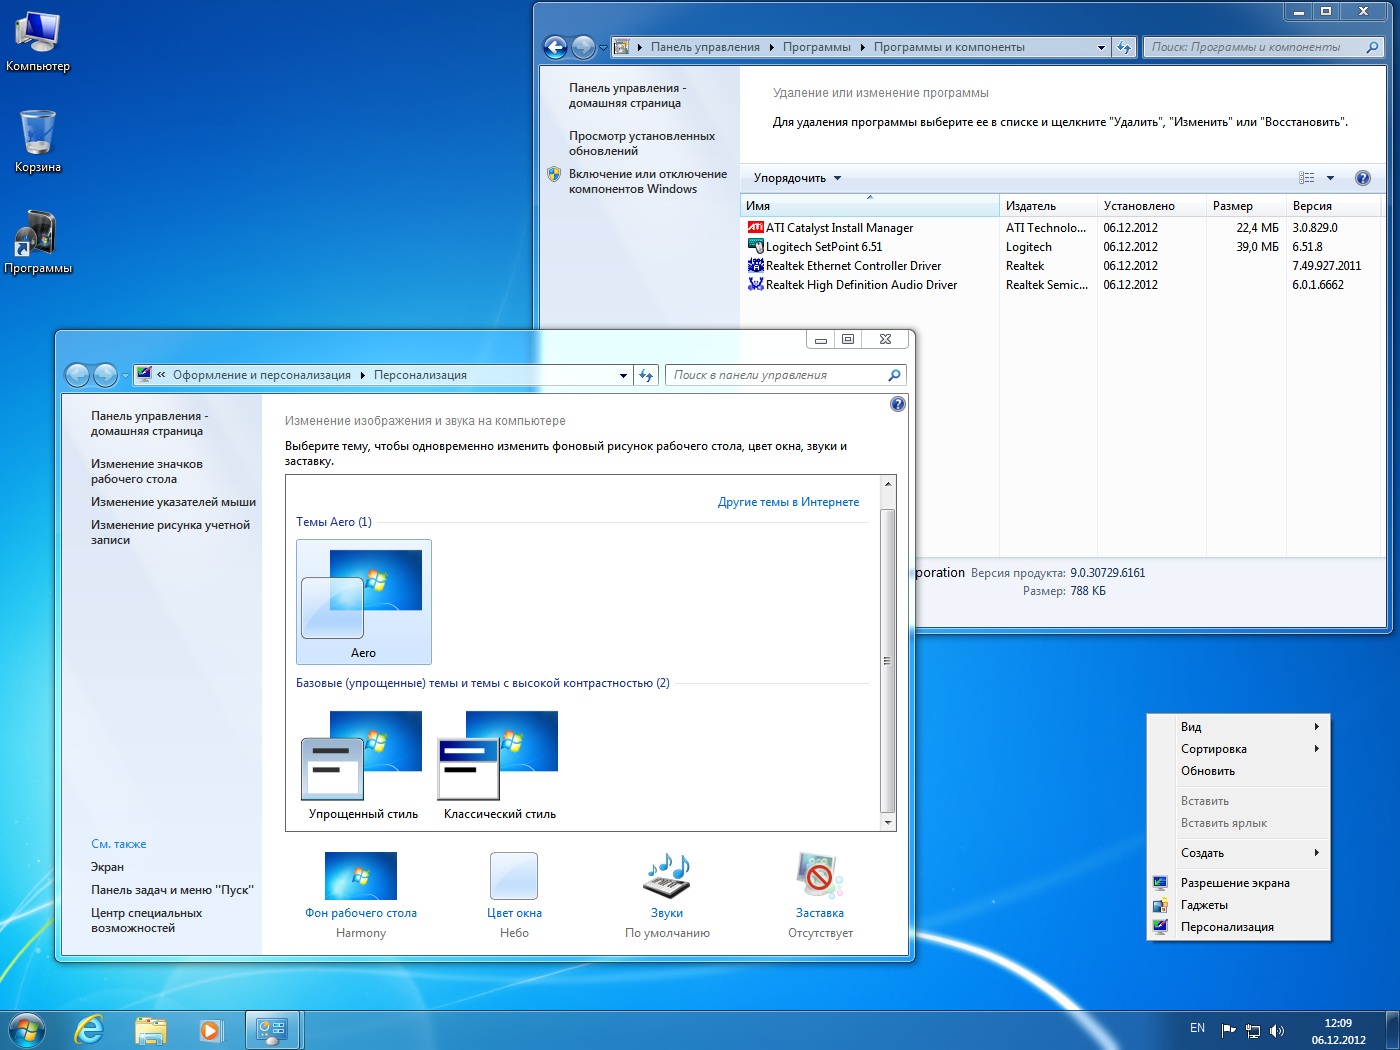 Программы и компоненты Windows 7